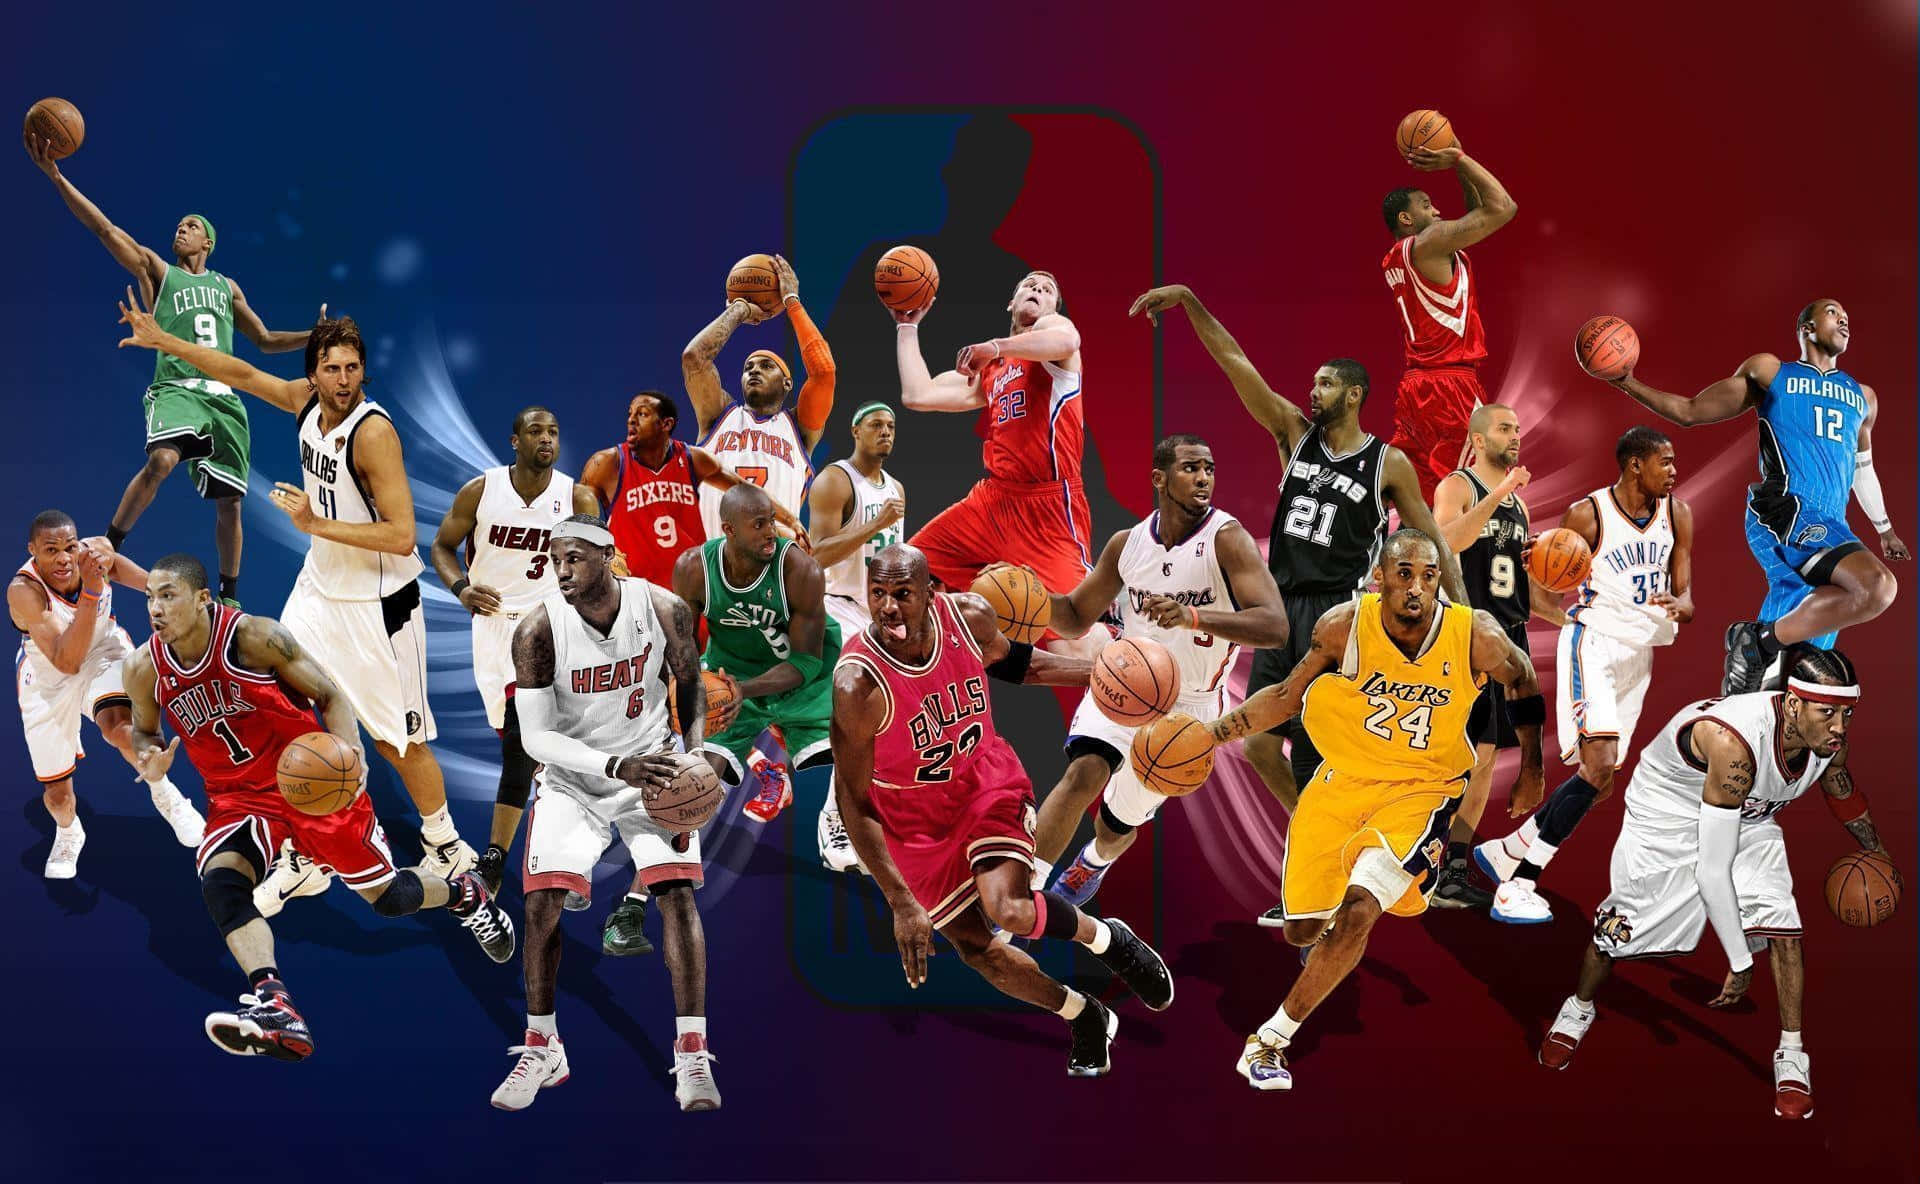 NBA Superstars 